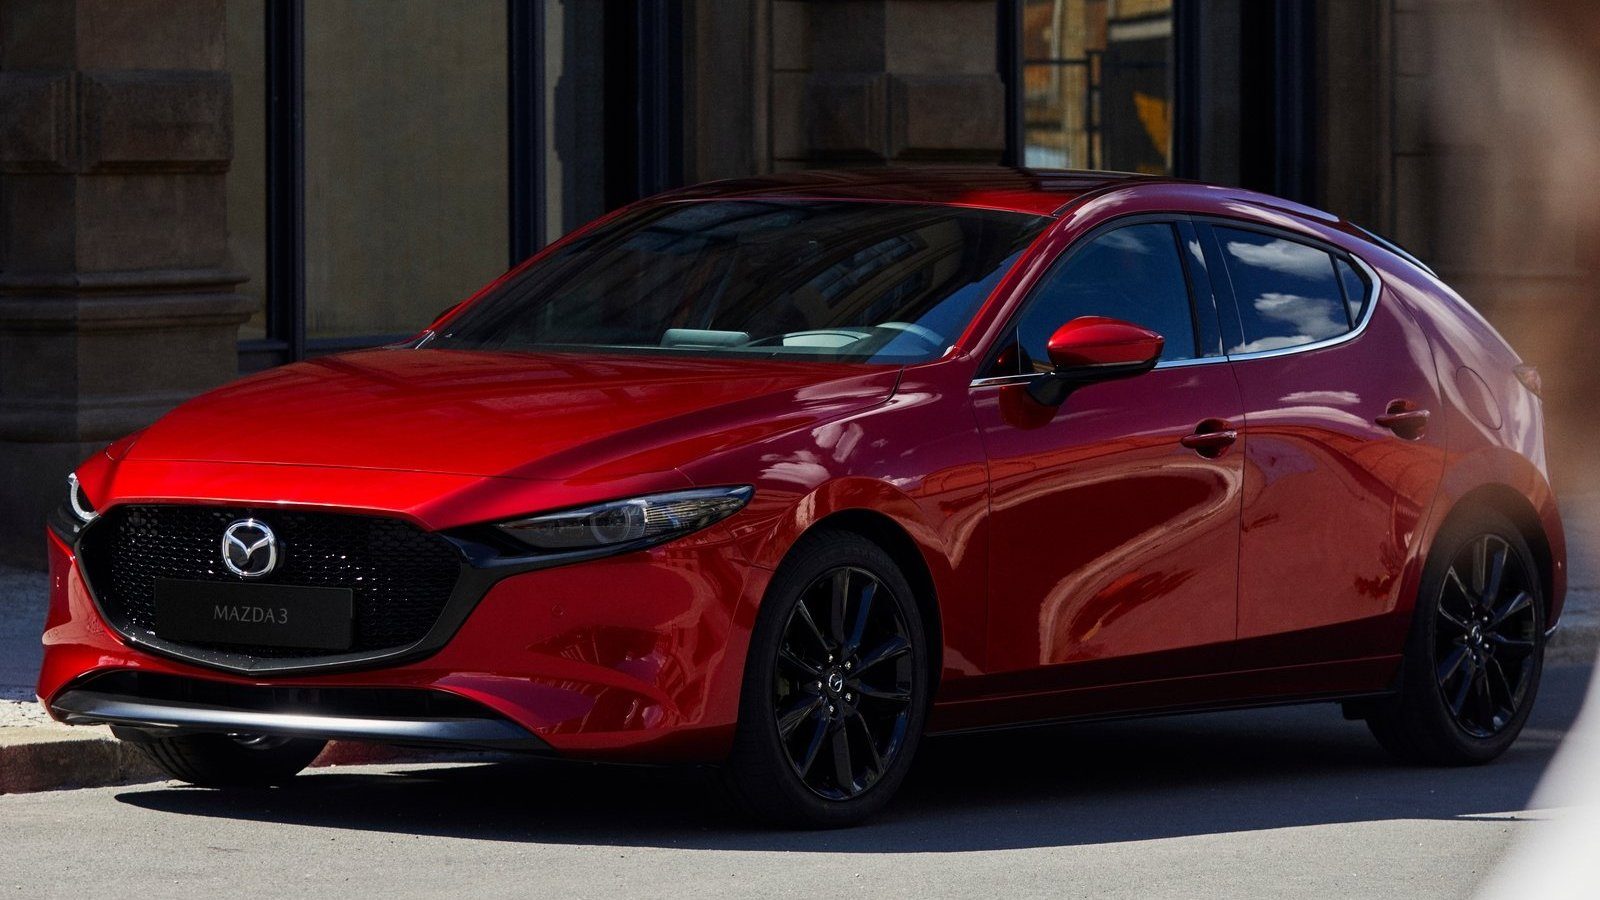 Mazda-3-2019-Hatchback-Sedan-16-1600x900.jpg